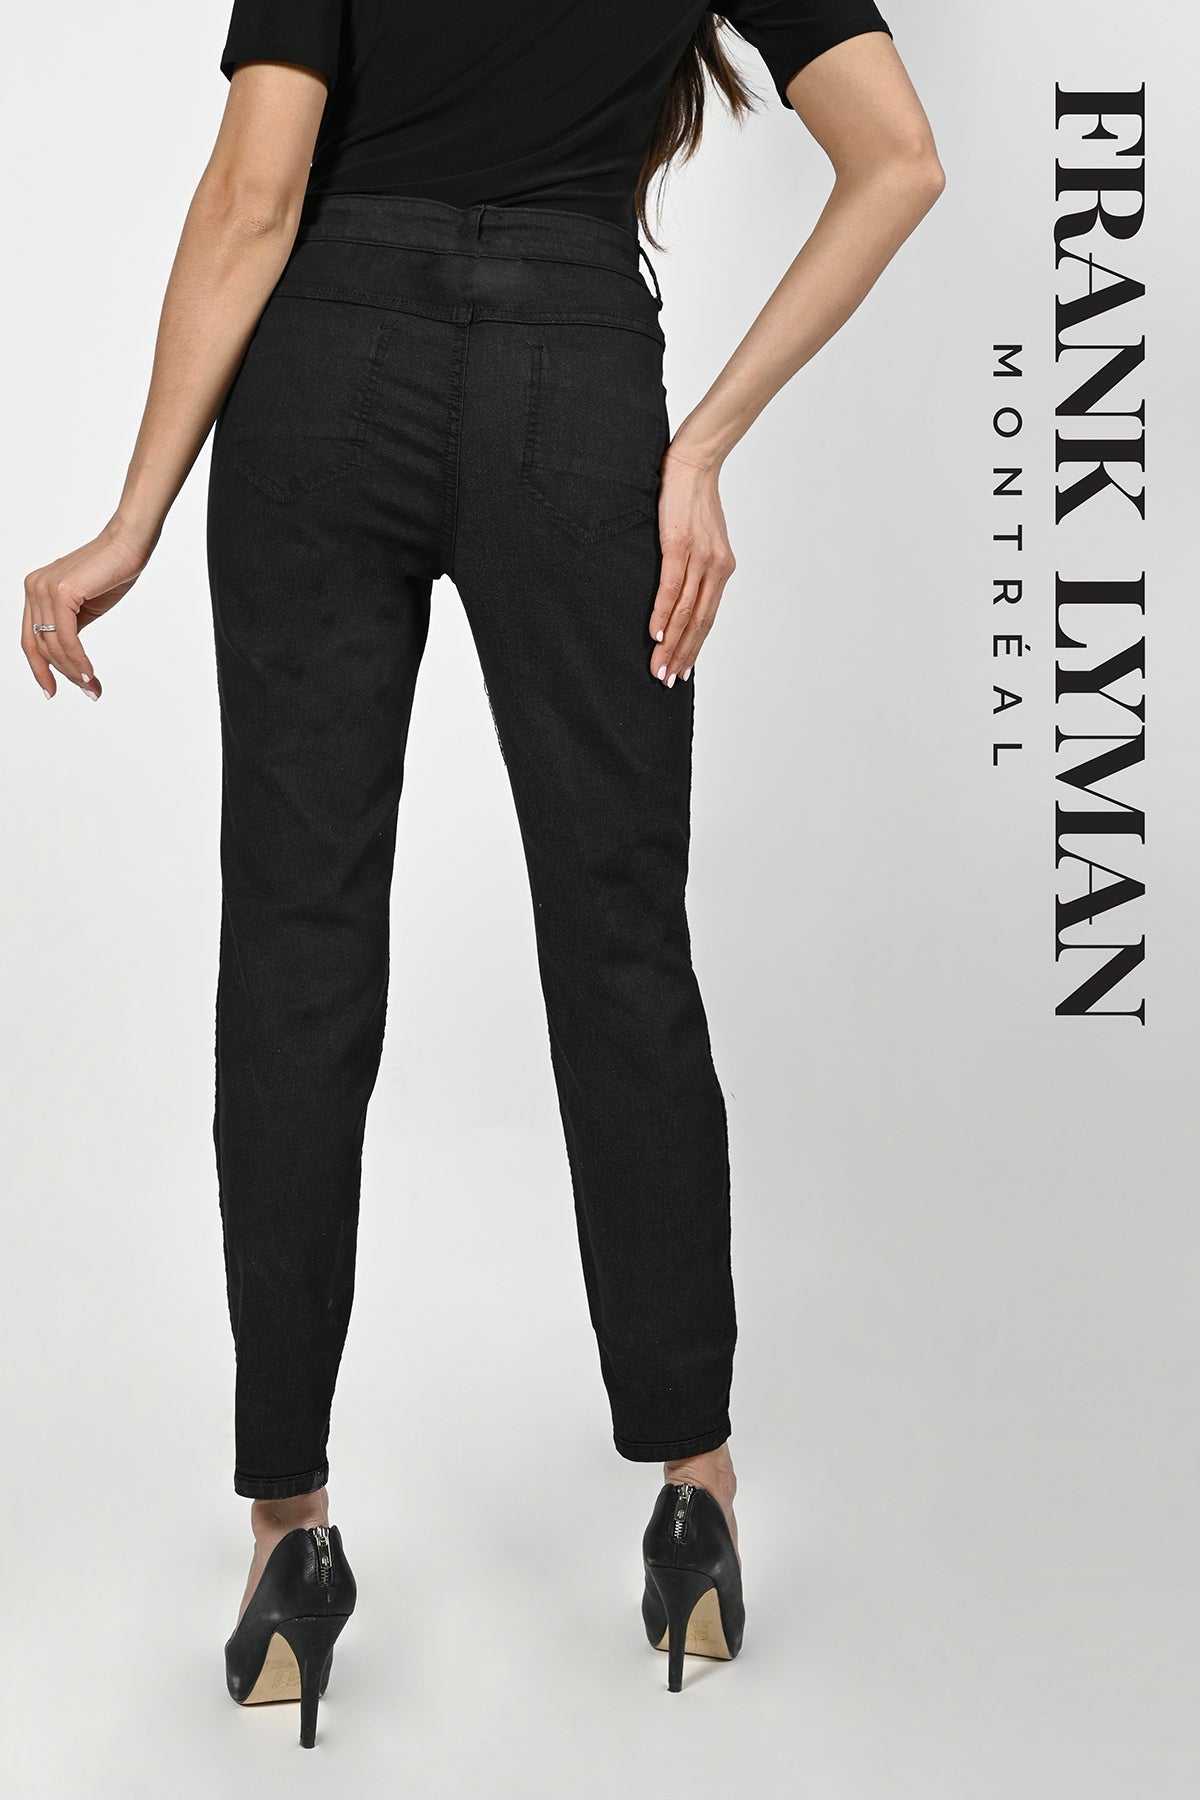 Frank Lyman Montreal Jeans-Buy Frank Lyman Montreal Jeans Online-Frank Lyman Montreal Reversible Jeans-Frank Lyman Montreal Online Shop